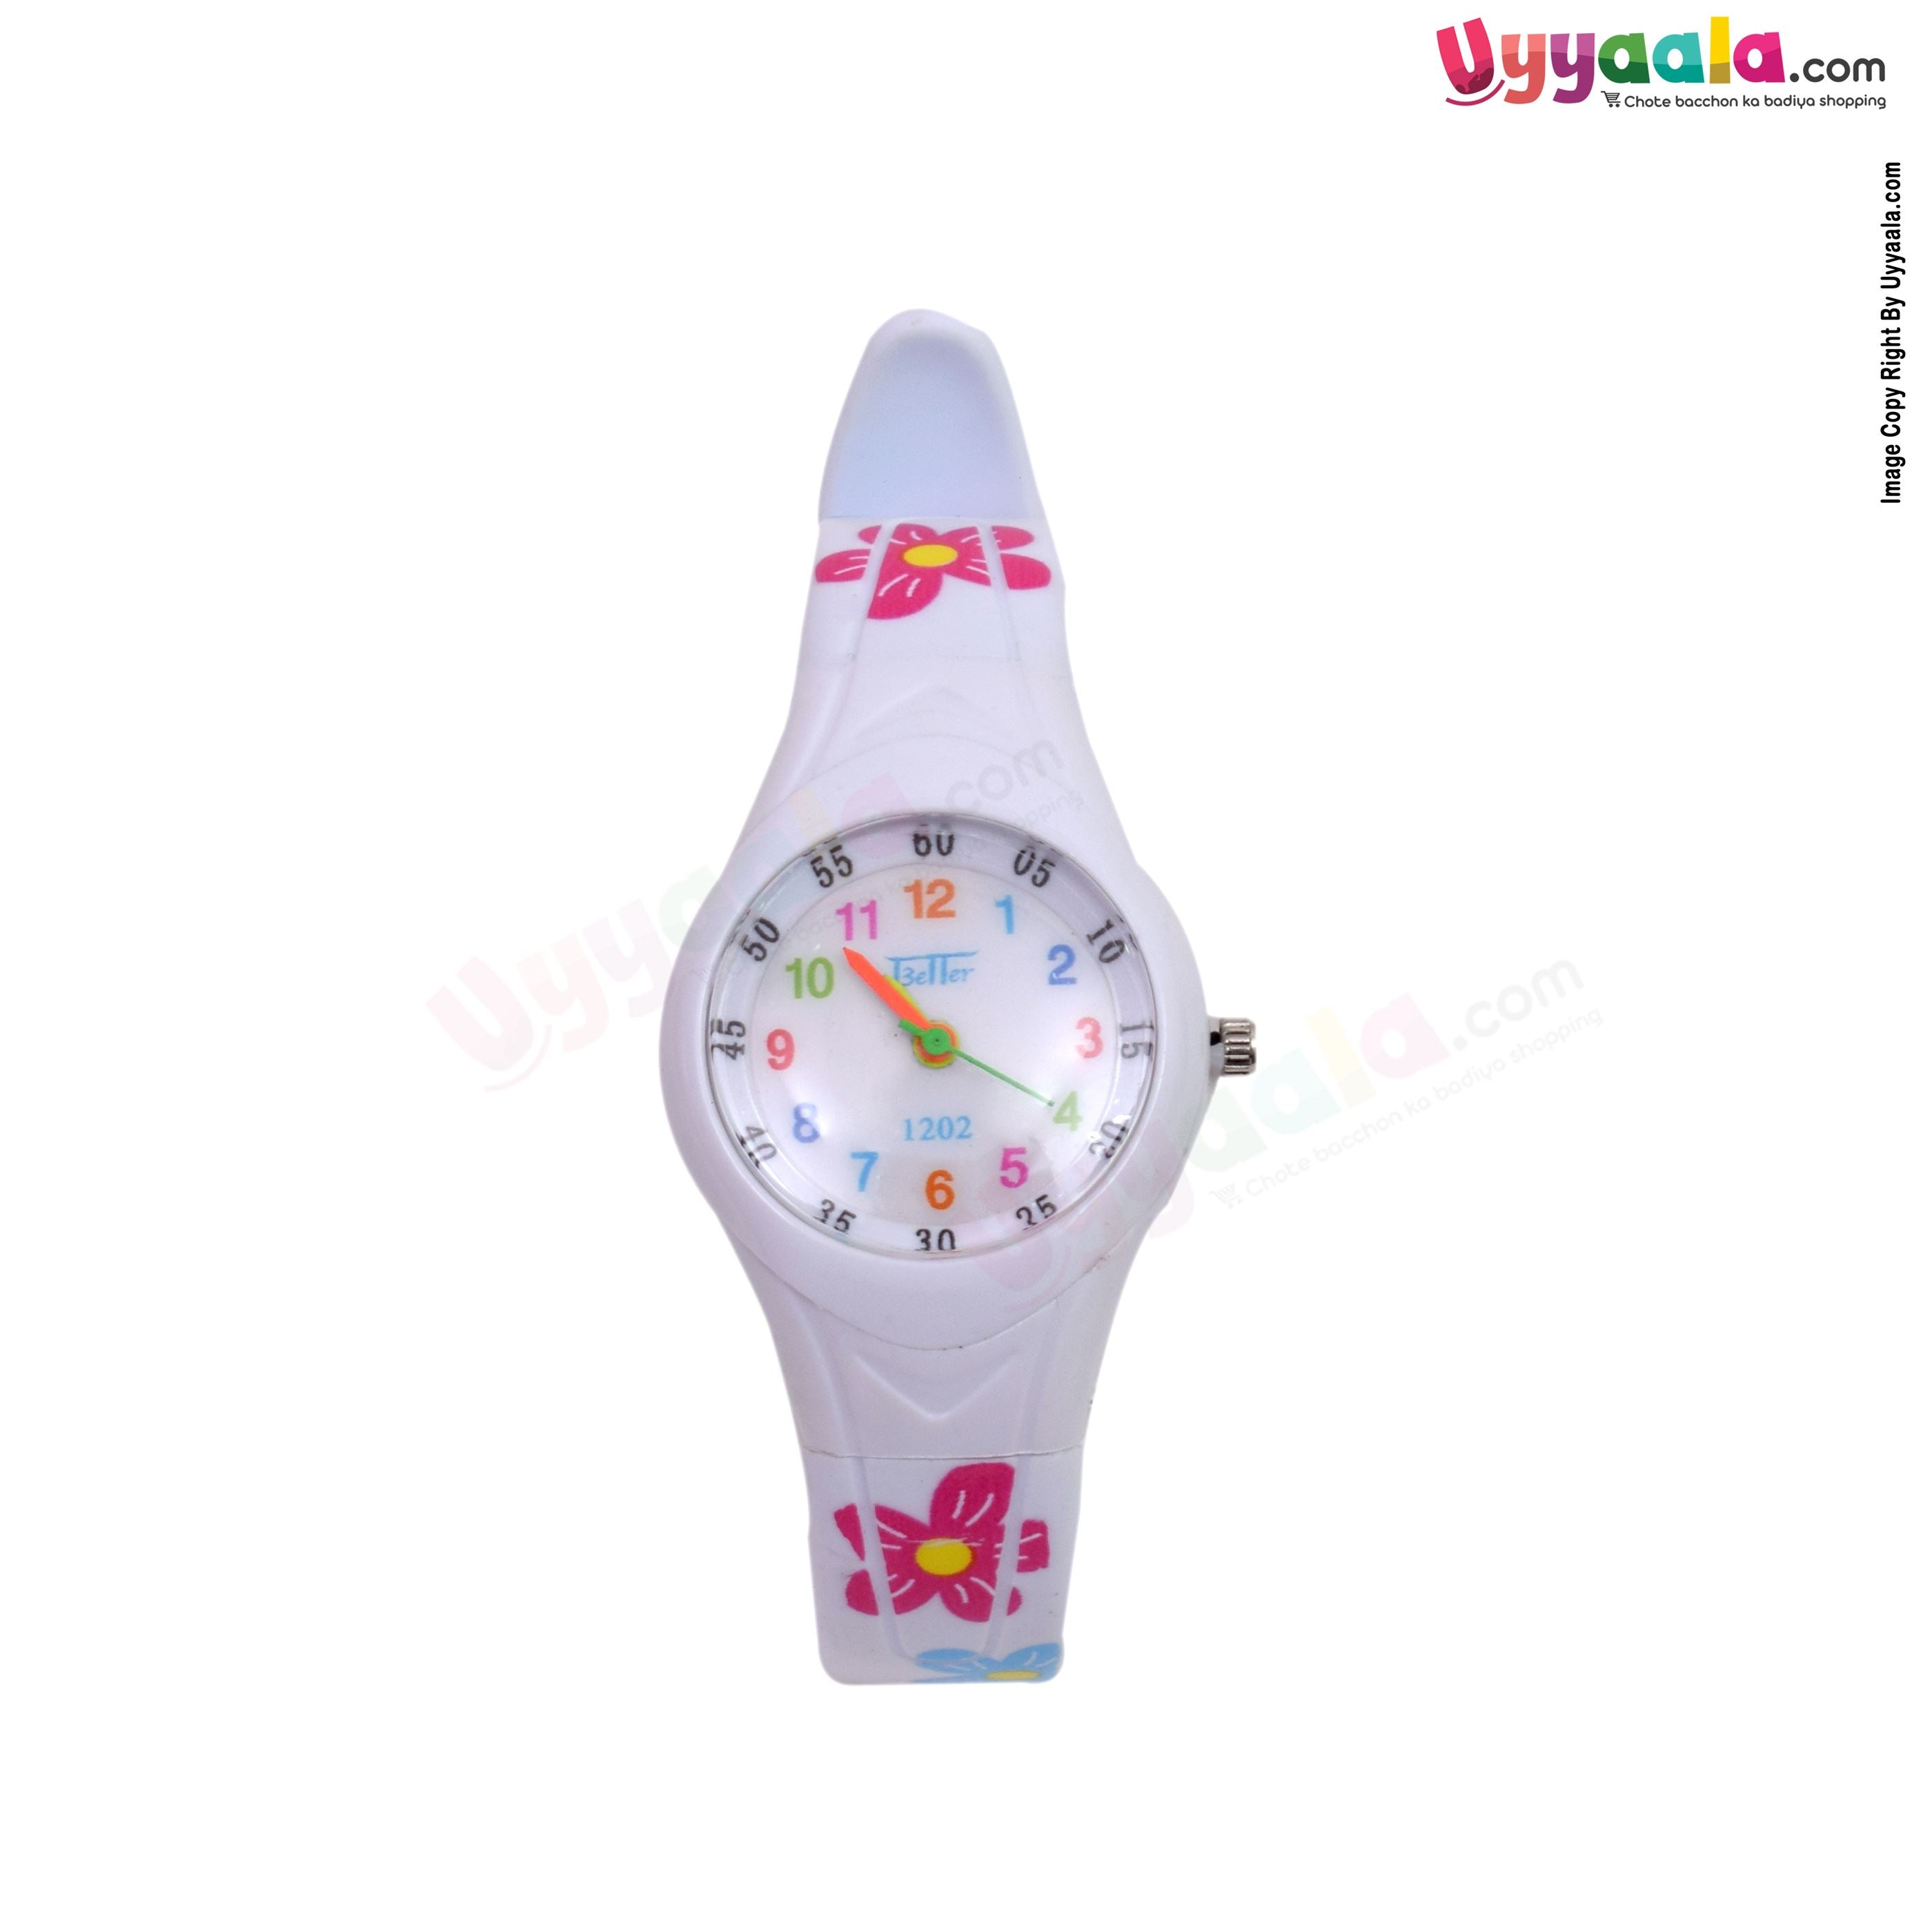 White analog wrist watch for kids